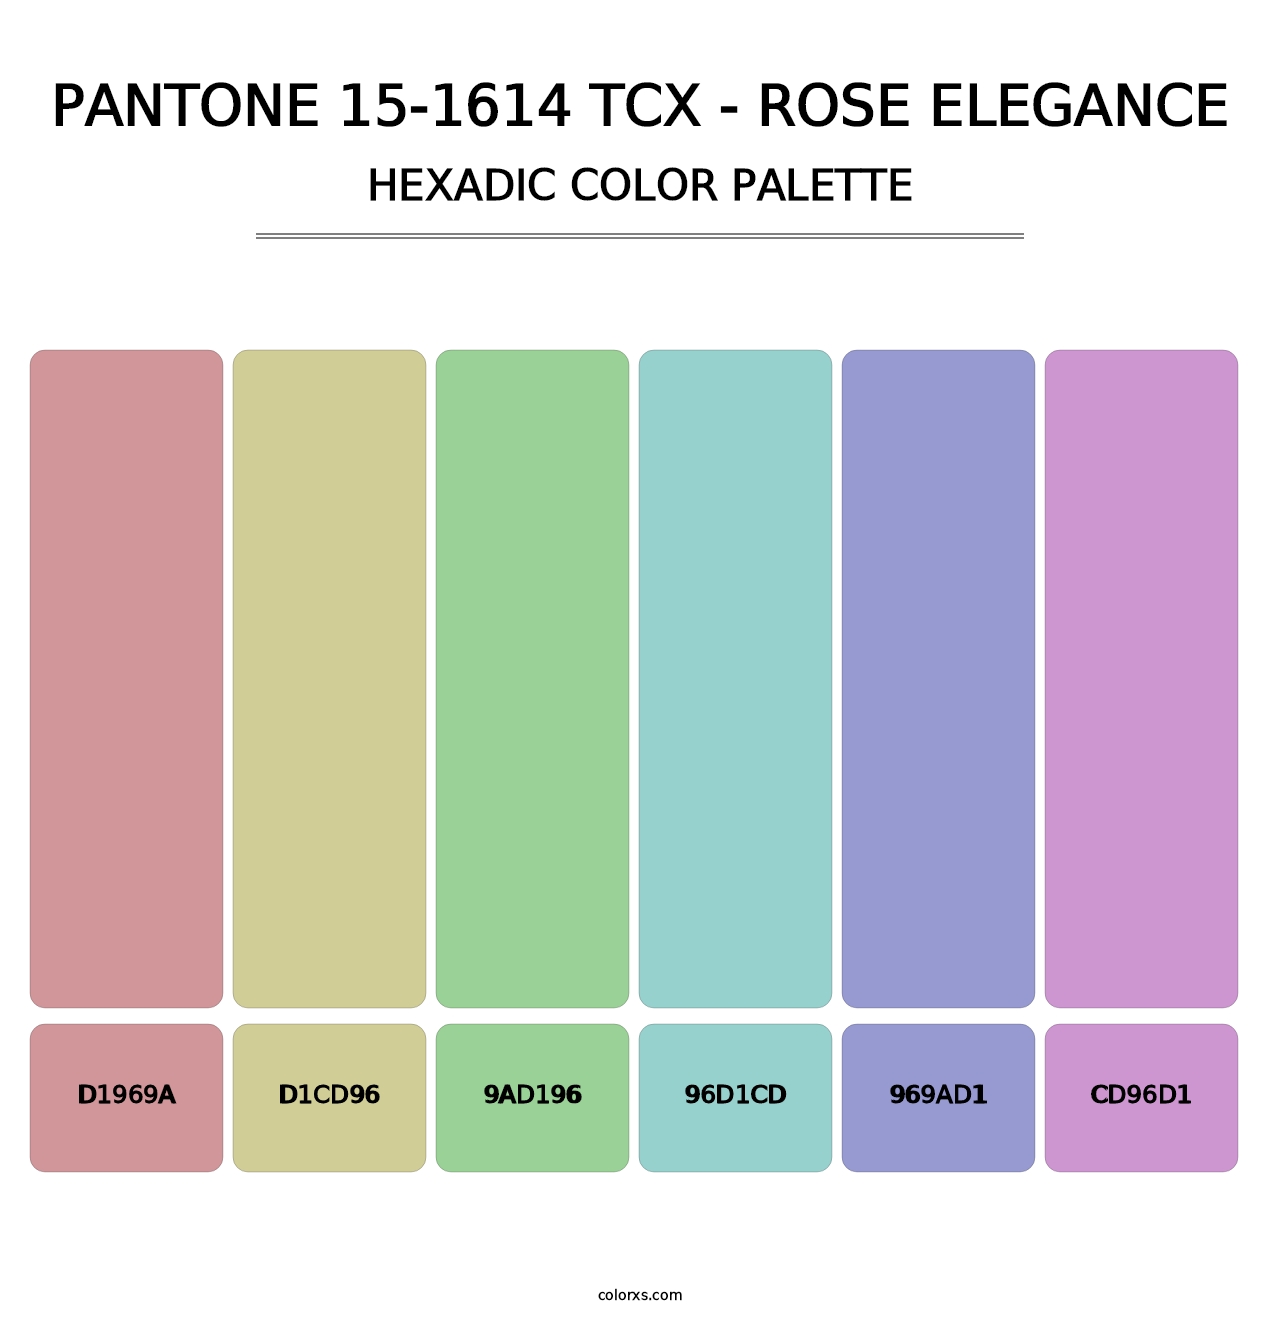 PANTONE 15-1614 TCX - Rose Elegance - Hexadic Color Palette